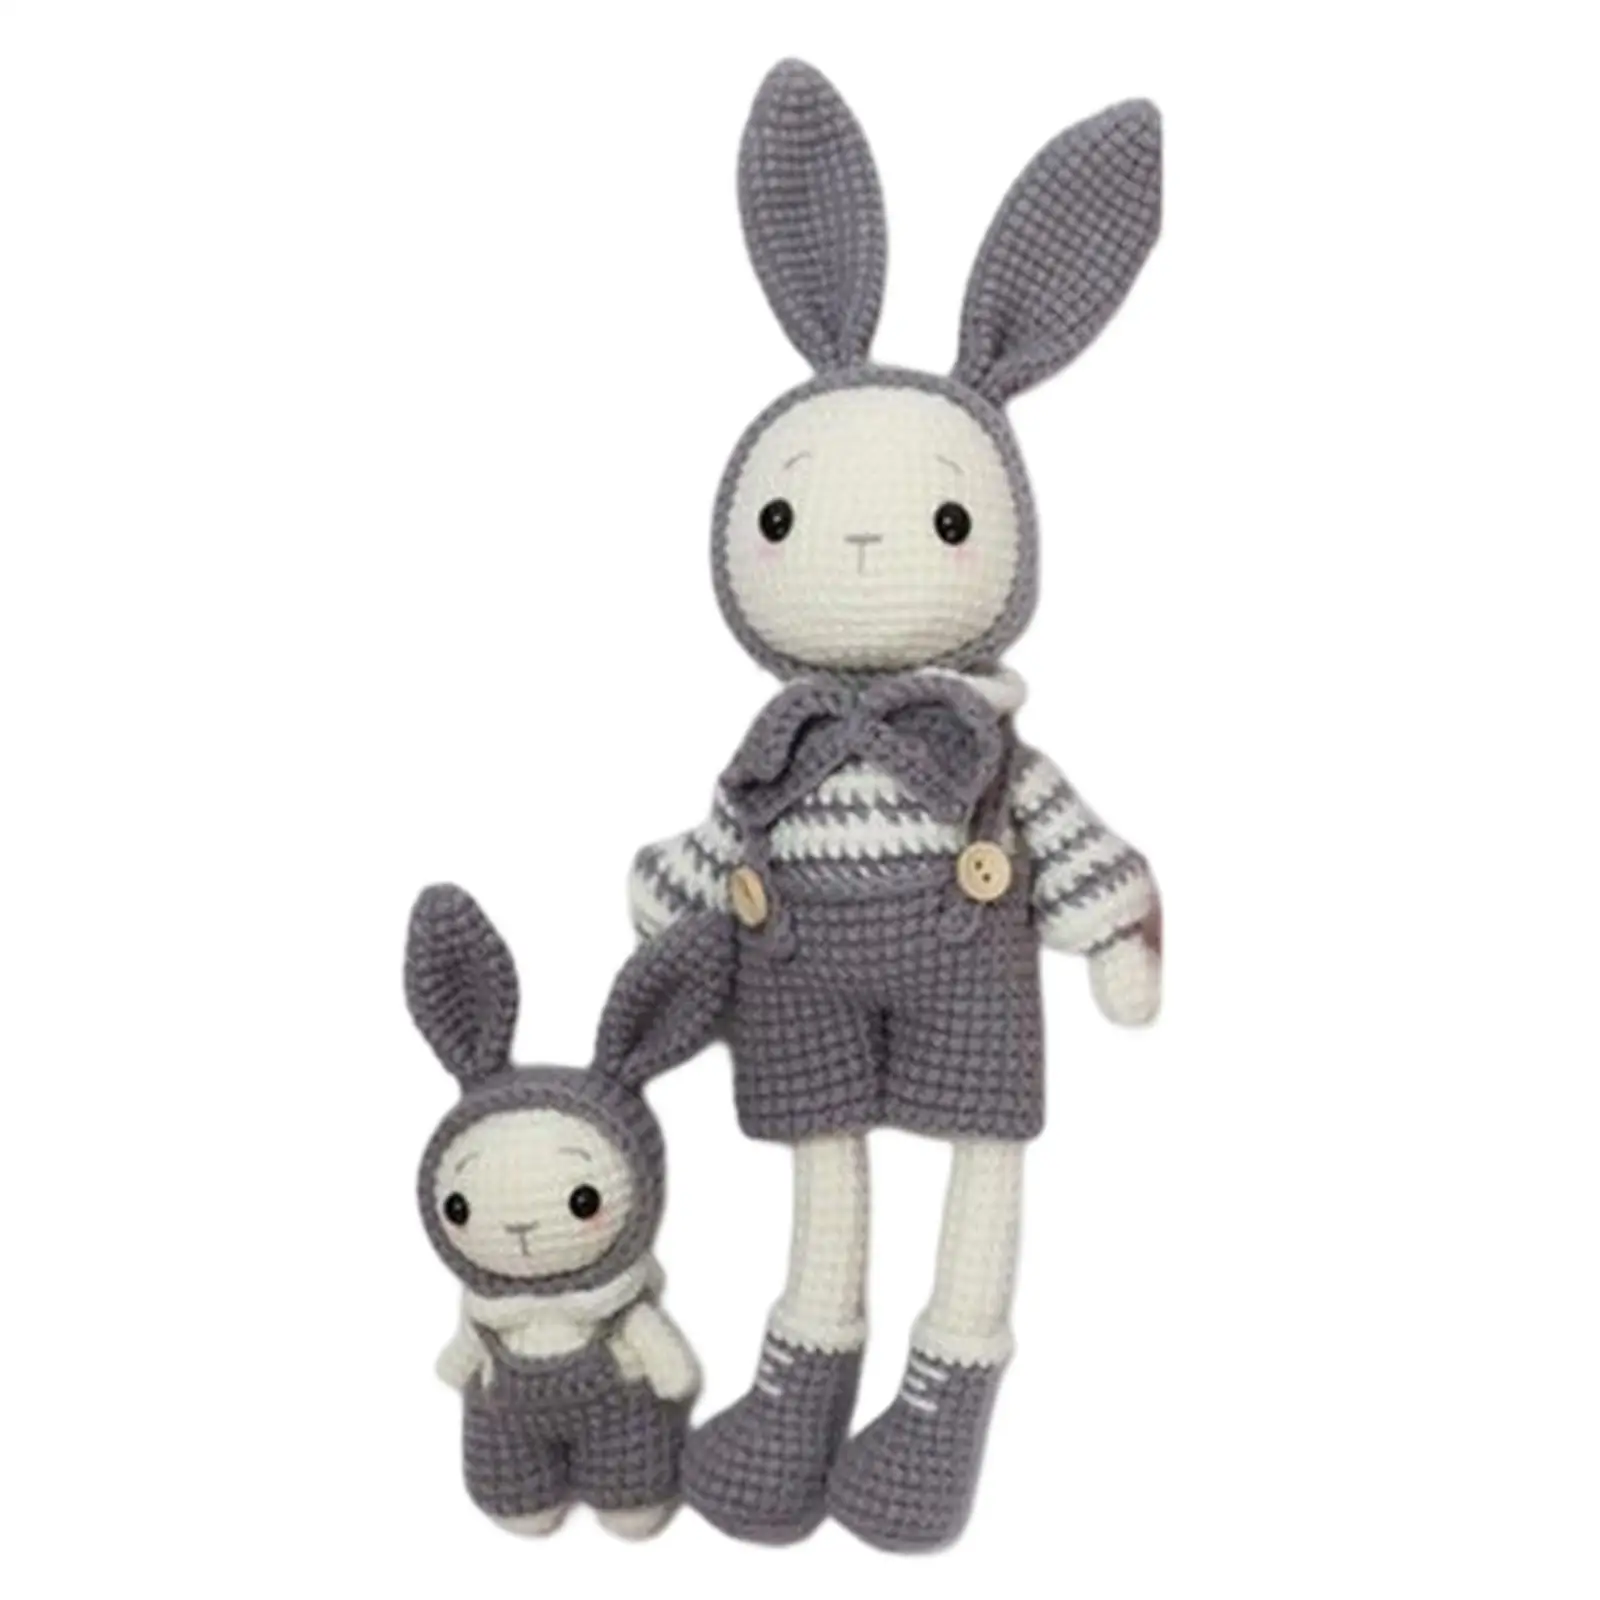 DIY Bunny Doll Crochet Set Starter Pack Craft Art for Beginners including Crochet Hook, Yarn Balls, Instructions, Accessories